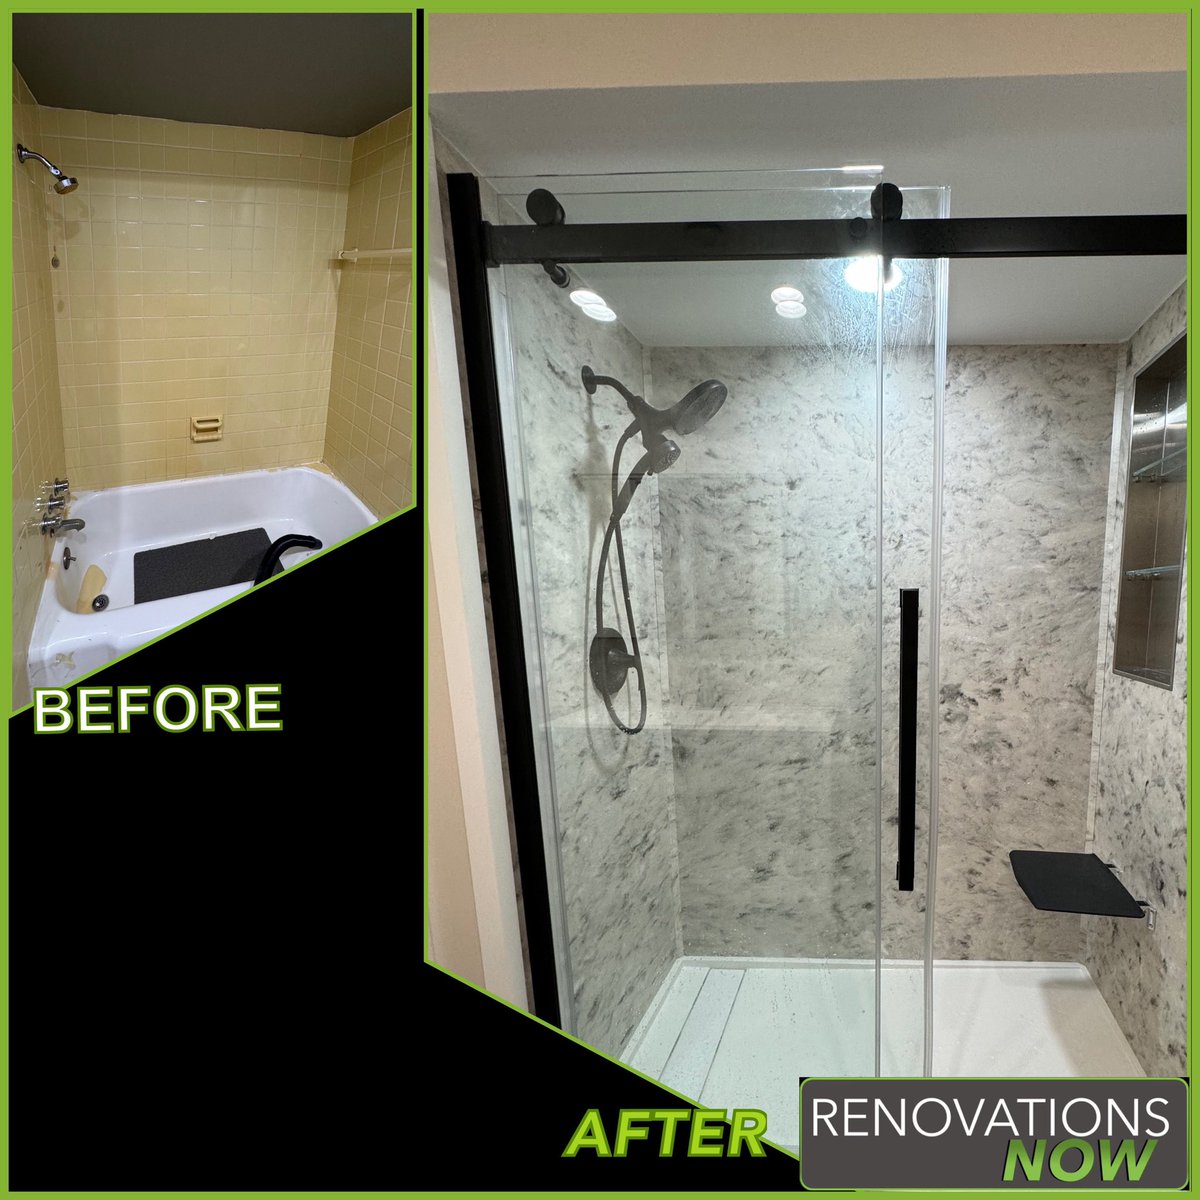 Fab-less 😒 to FAB-ULOUS ✨ #RenovationsNow ✅ 

#wordplay #homeimprovement #bathroomdesign #interiordesign #shower #remodel #macombcounty #style #fabulous